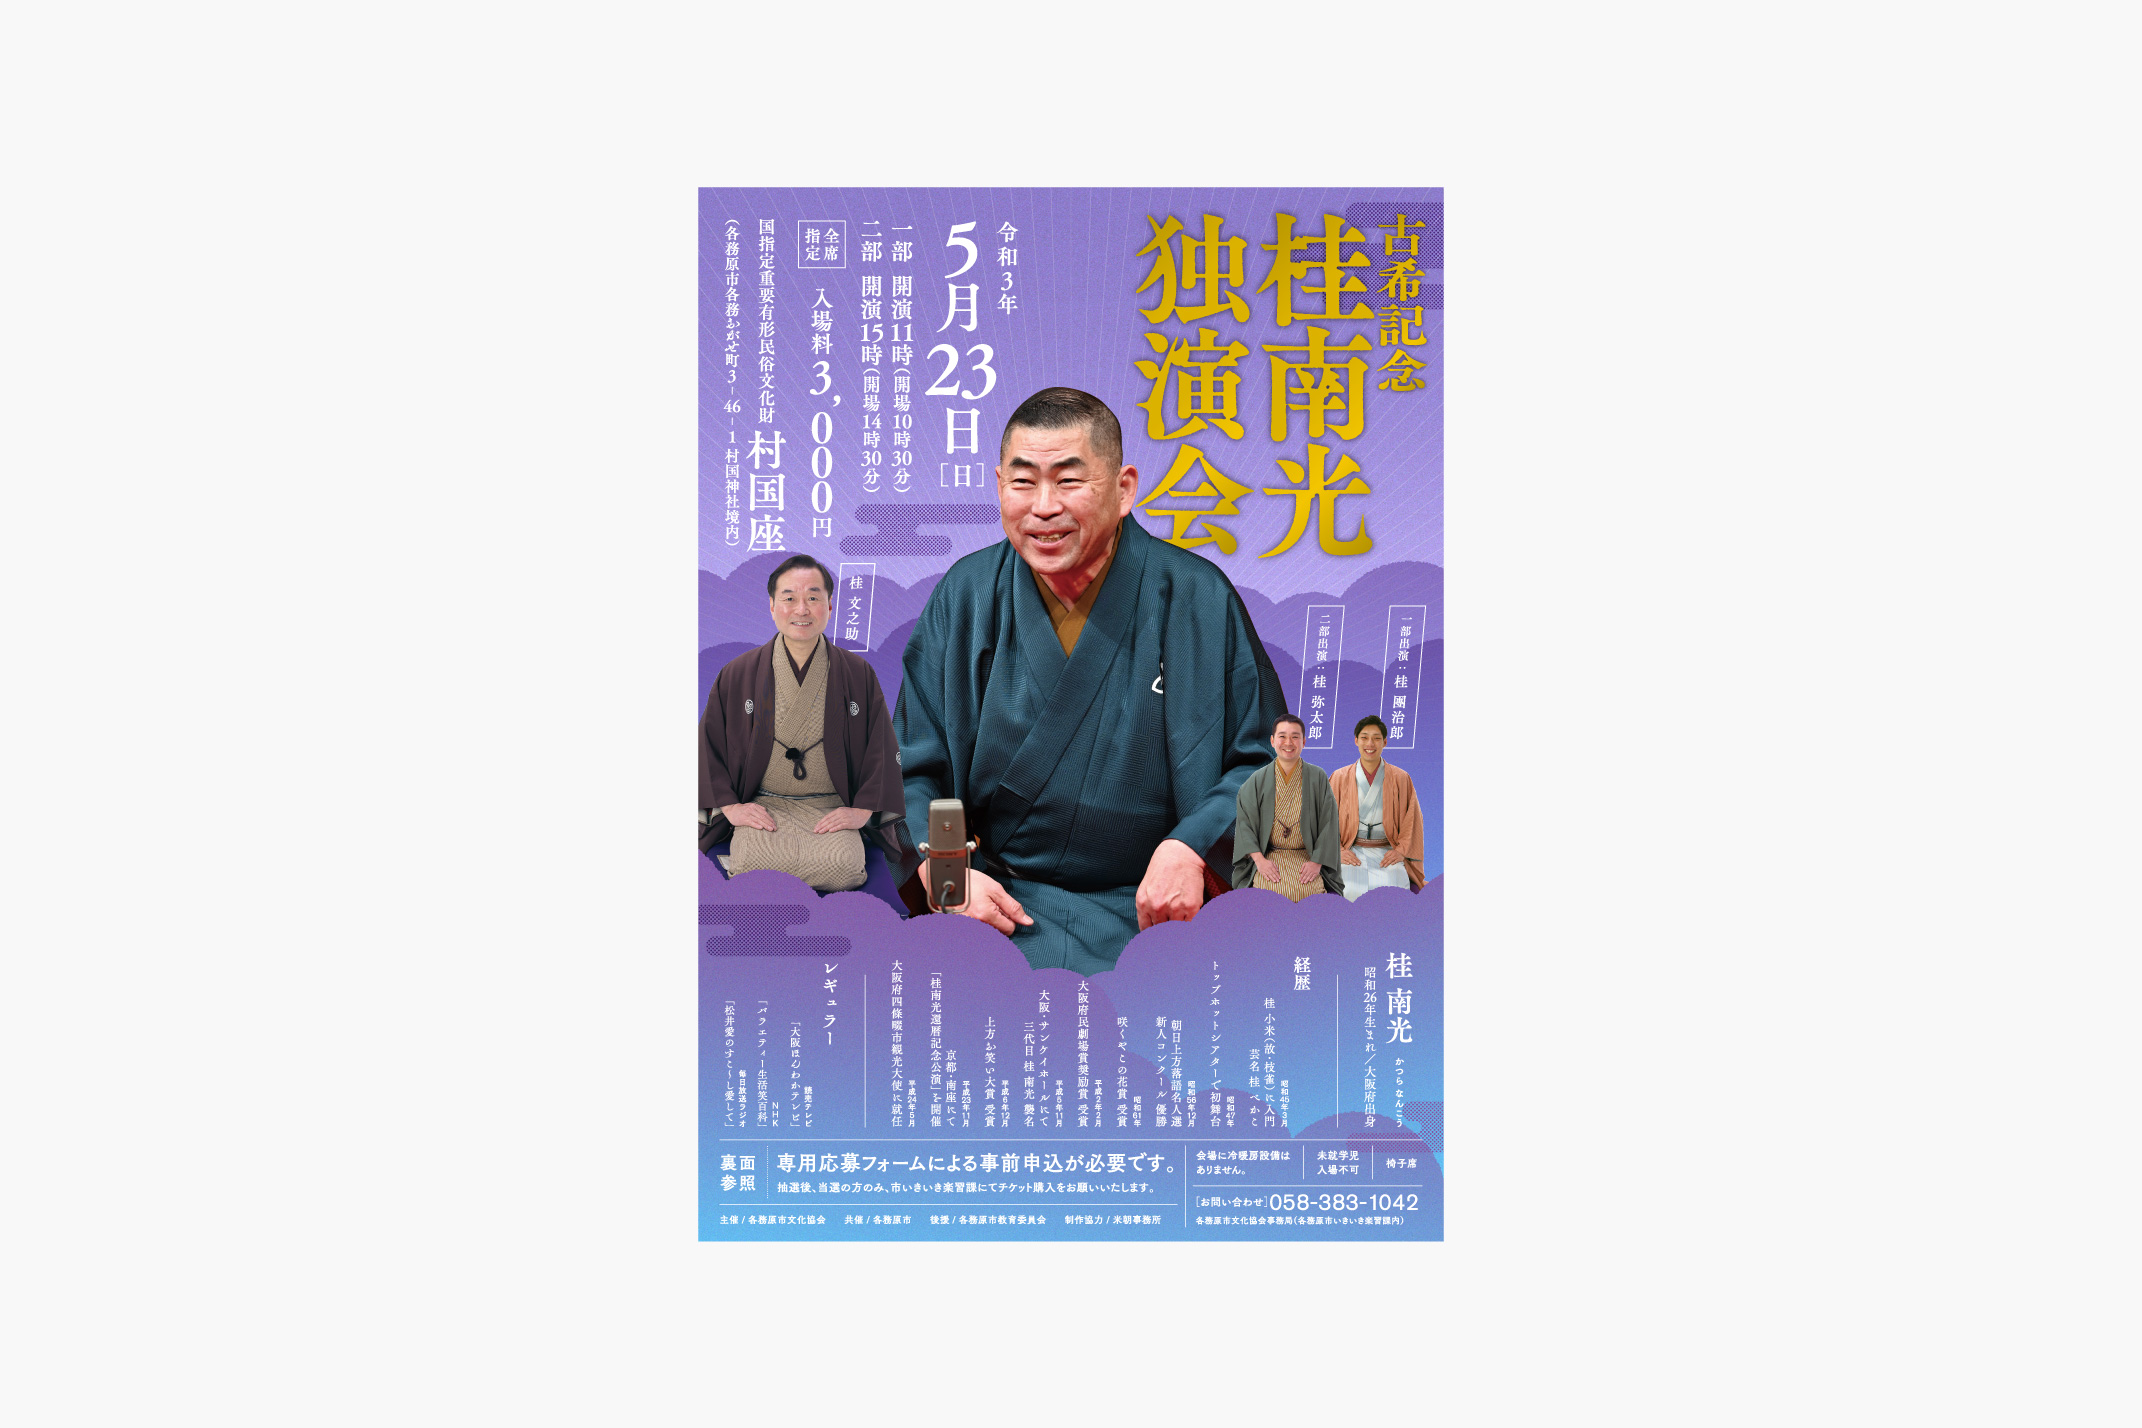 桂南光独演会 / Flyer